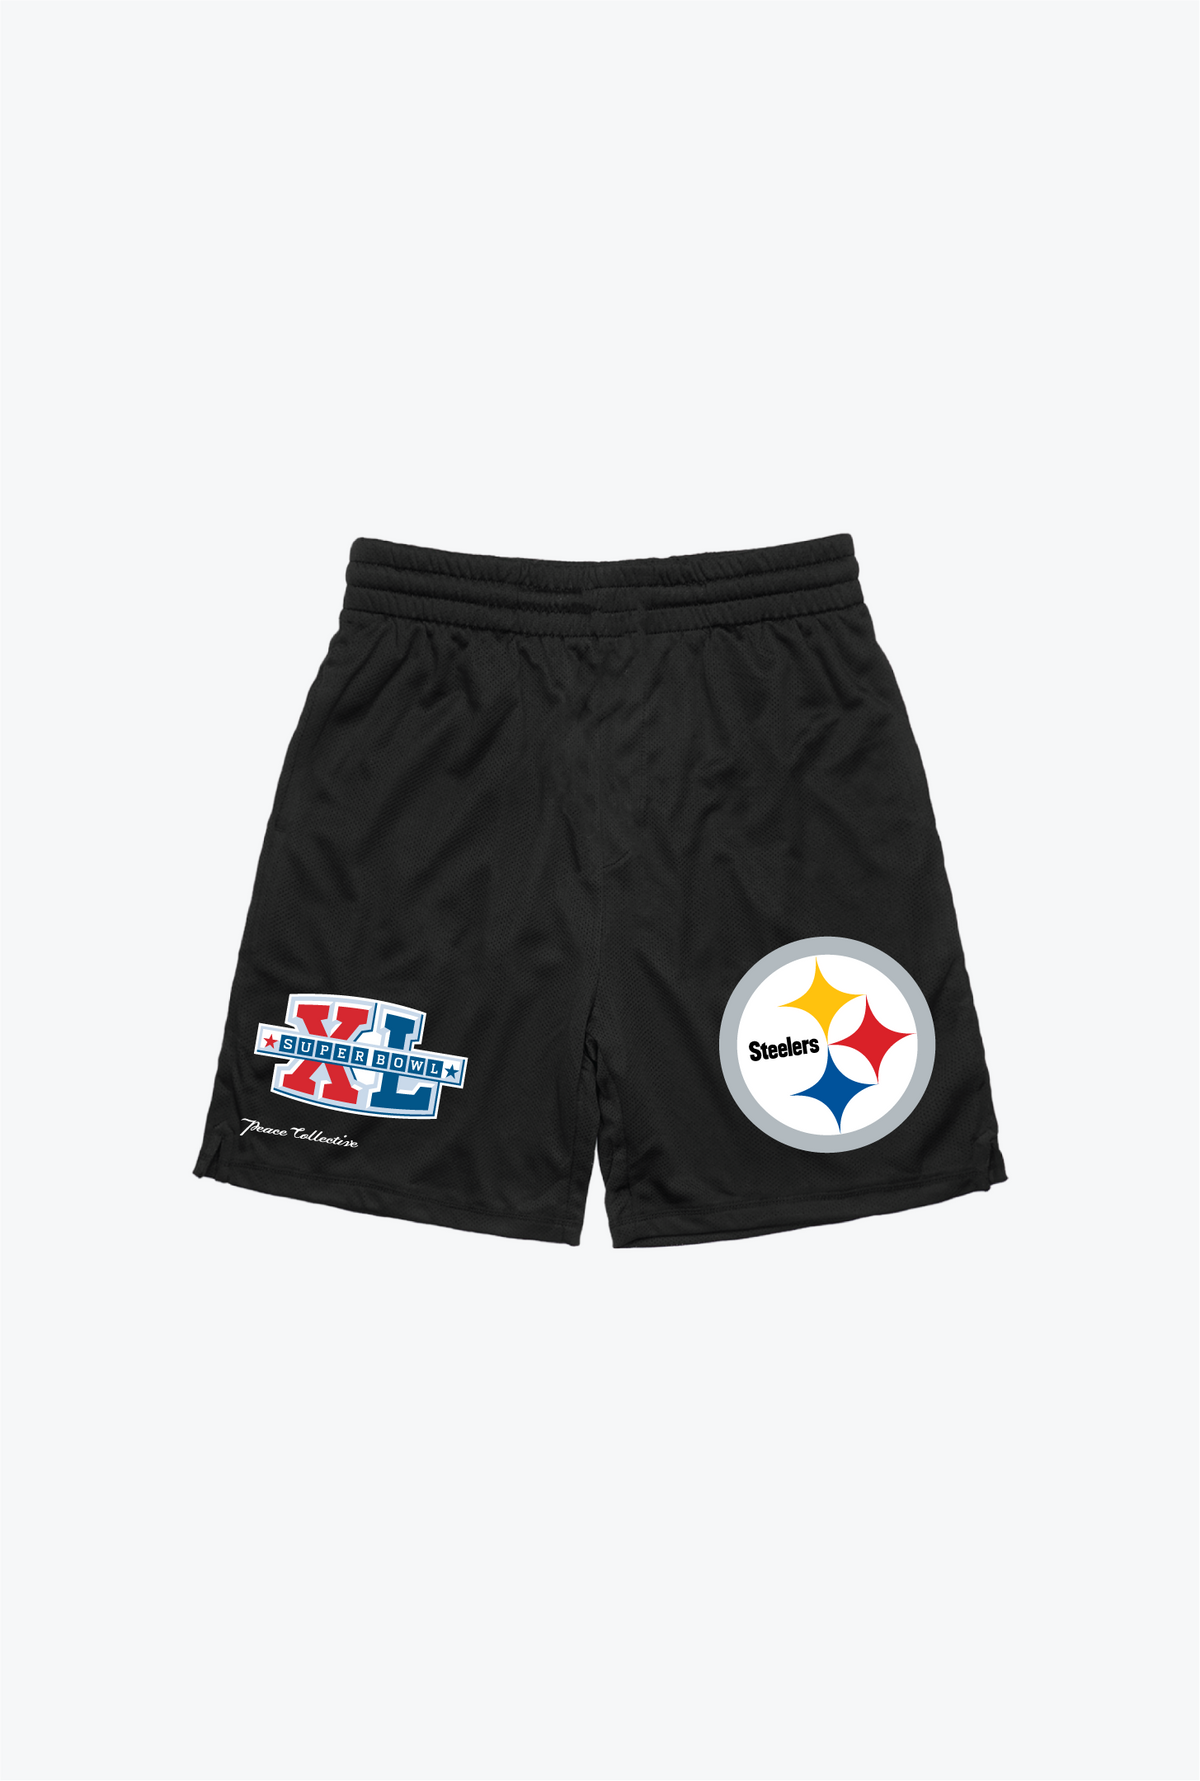 Pittsburgh Steelers Super Bowl XL Mesh Shorts - Black